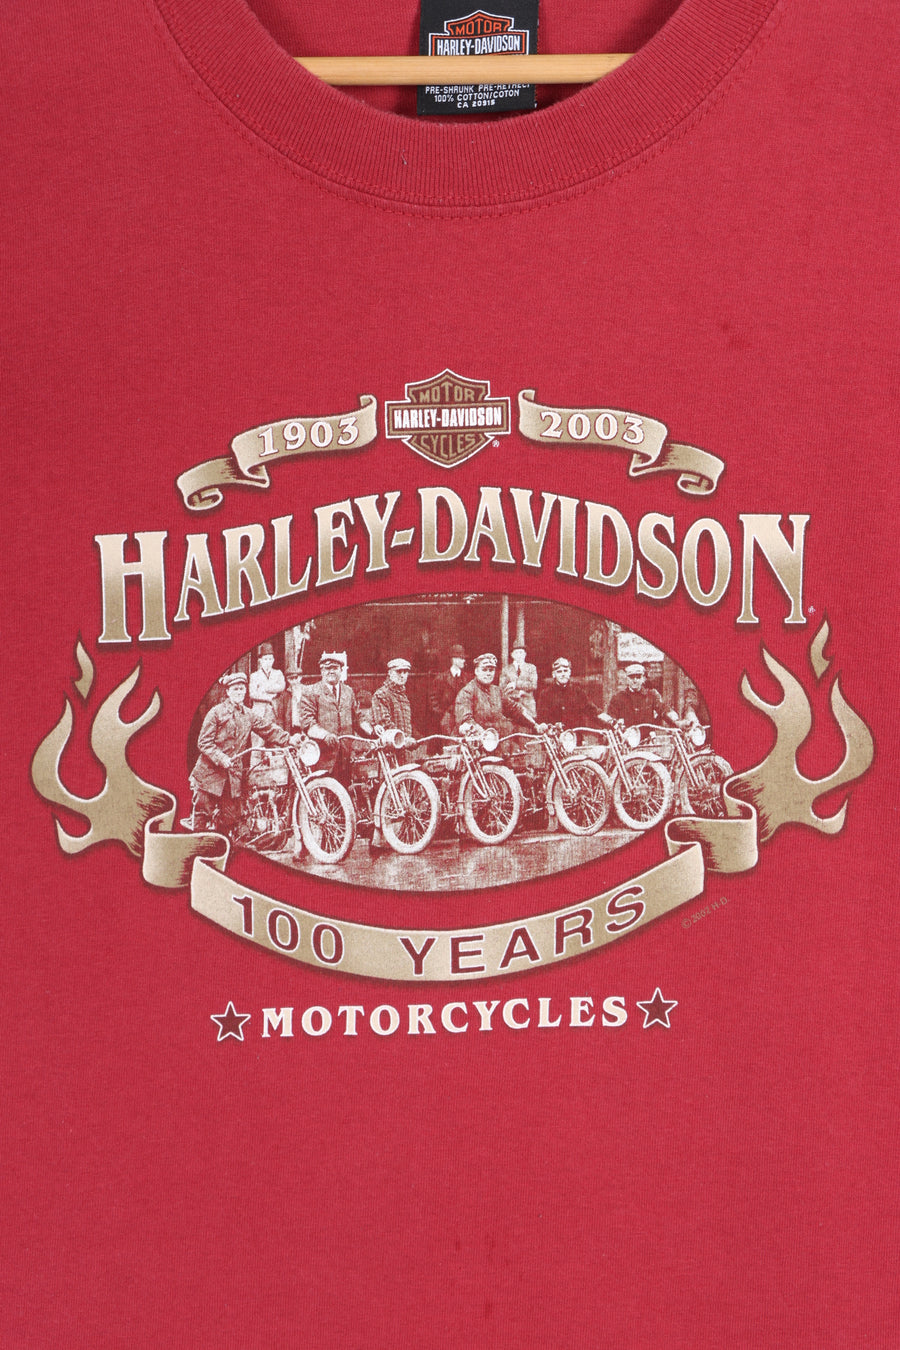 HARLEY DAVIDSON Ramsay's 100 Years T-Shirt Canada Made (M-L)